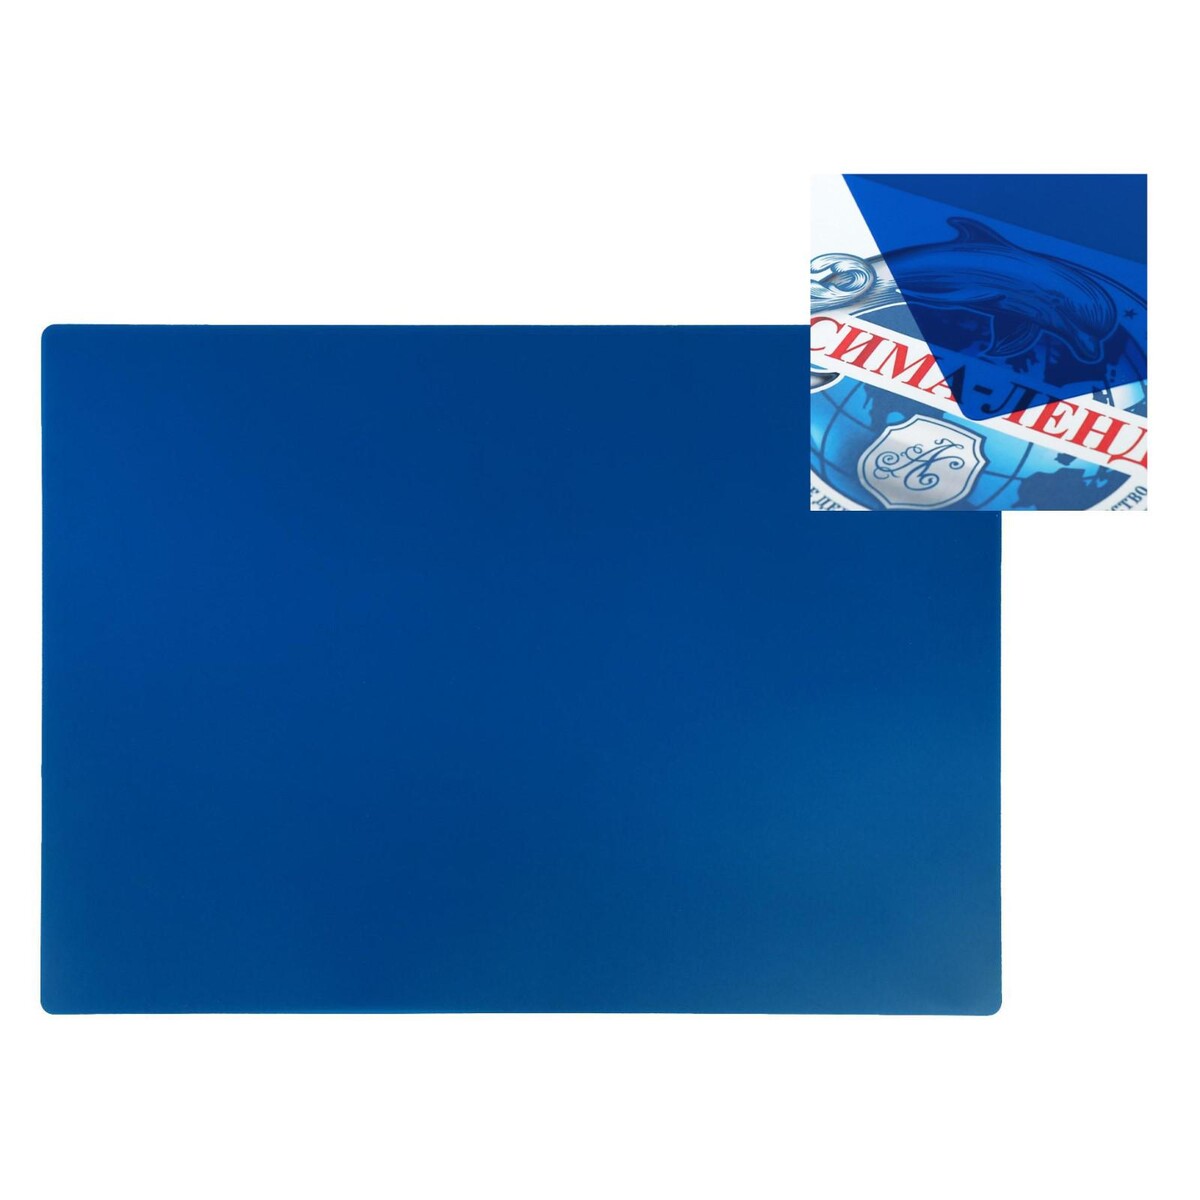 Накладка на стол пластиковая а3, 460 х 330 мм, 500 мкм, прозрачная, цвет темно-синий (подходит для офиса) накладка цилиндровая apecs dp c 0802 ab megapolis бронза 00023334